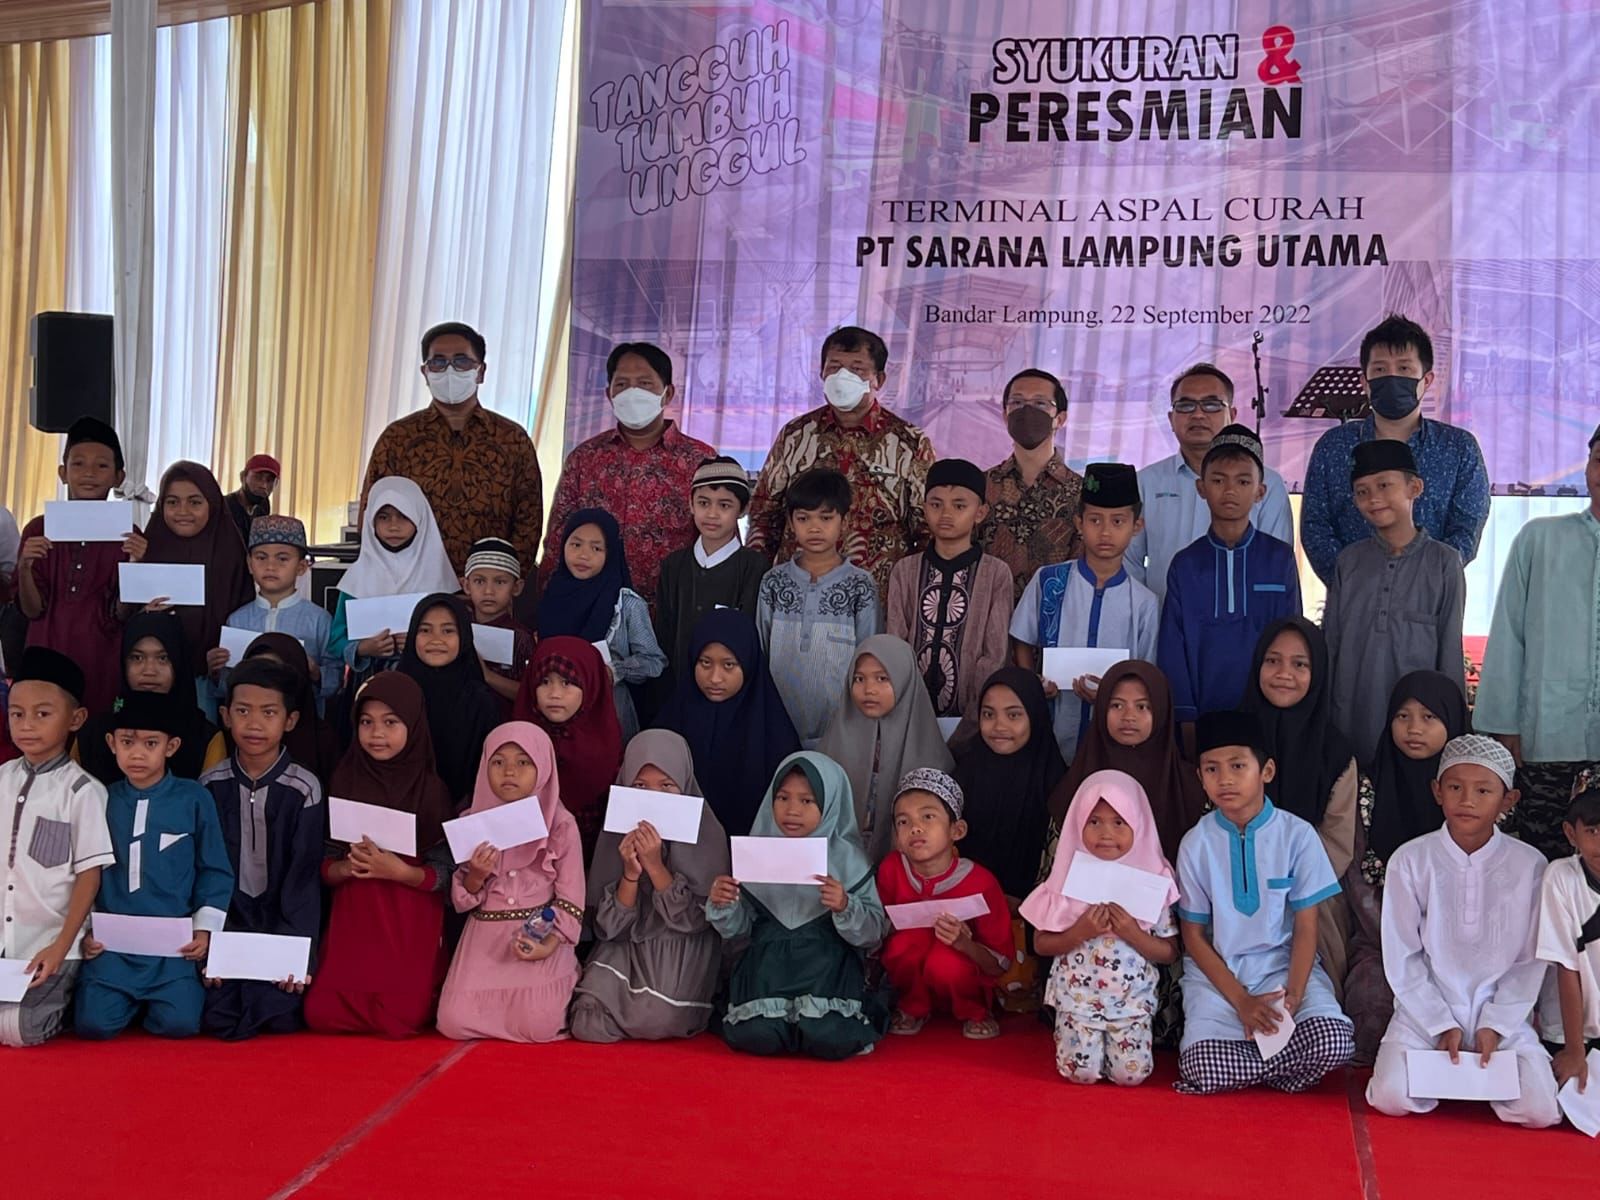 Pertamina Patra Niaga Regional Sumbagsel Resmikan Terminal Aspal Curah di Lampung